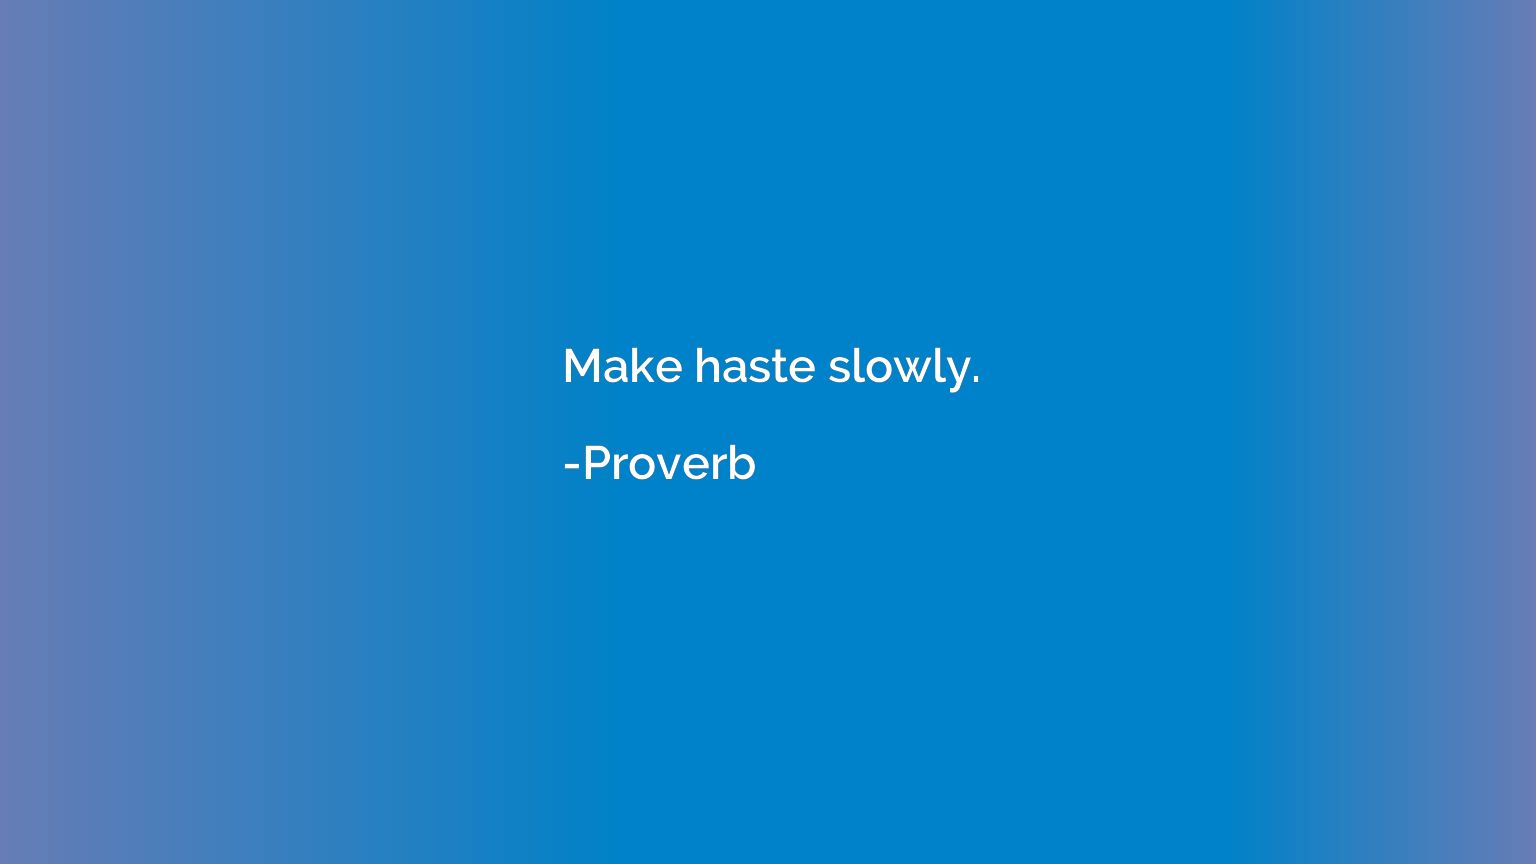 Make haste slowly.